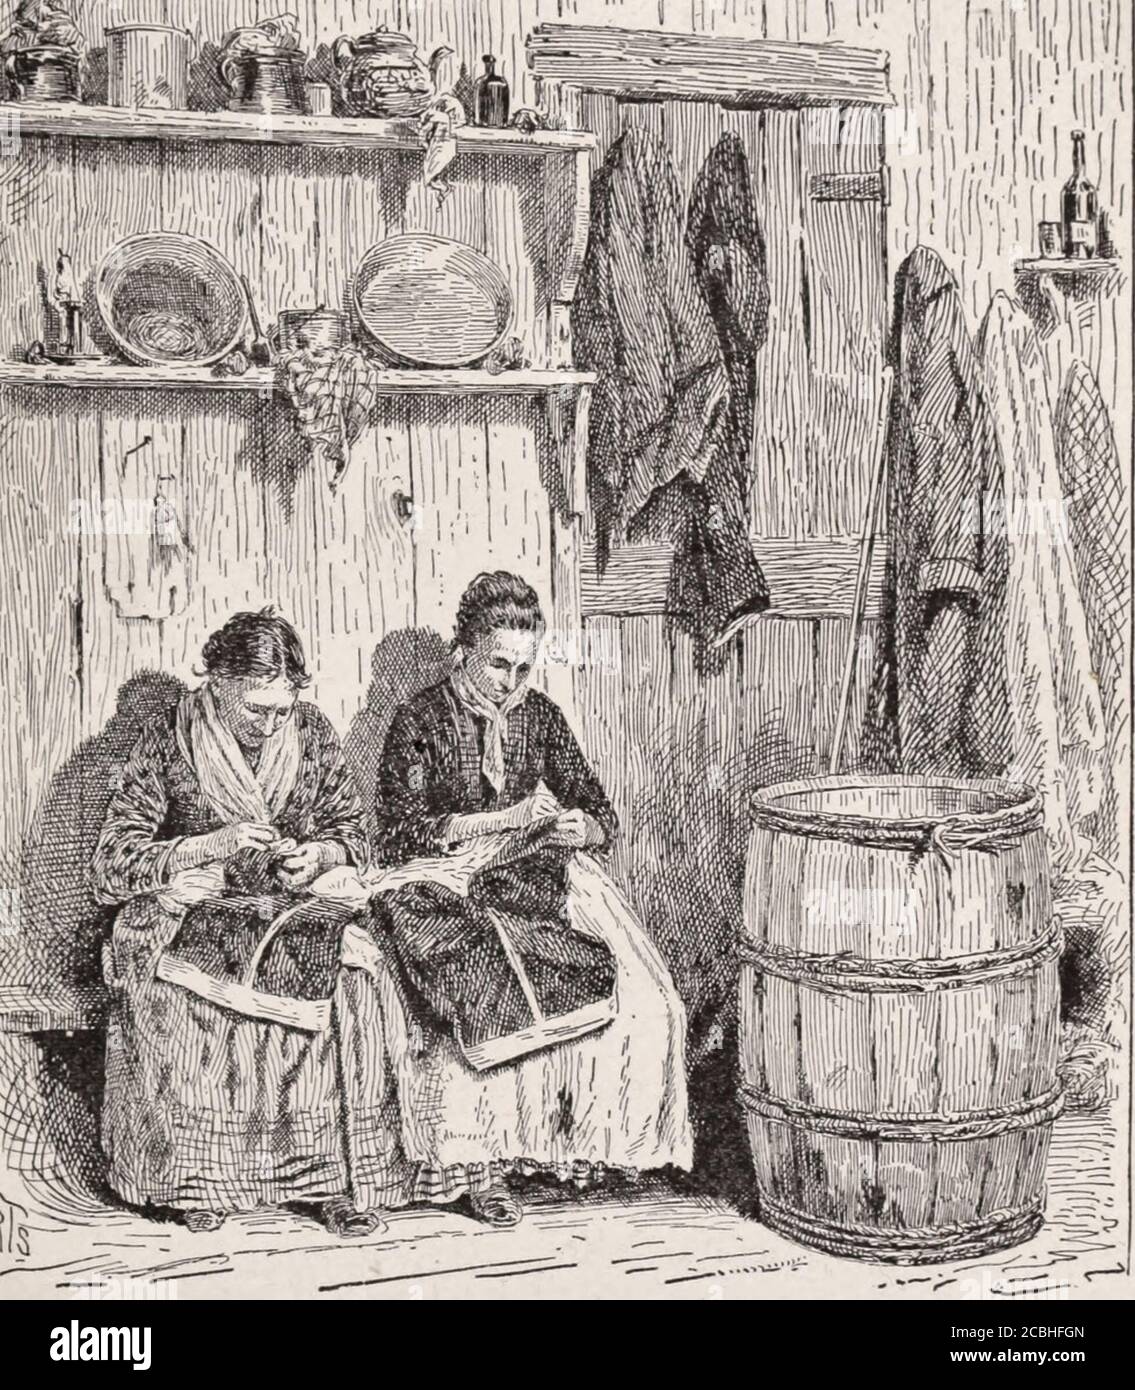 Acabando pantalones de chicos a diez centavos por docena pares - Nueva York, alrededor de 1892 Foto de stock